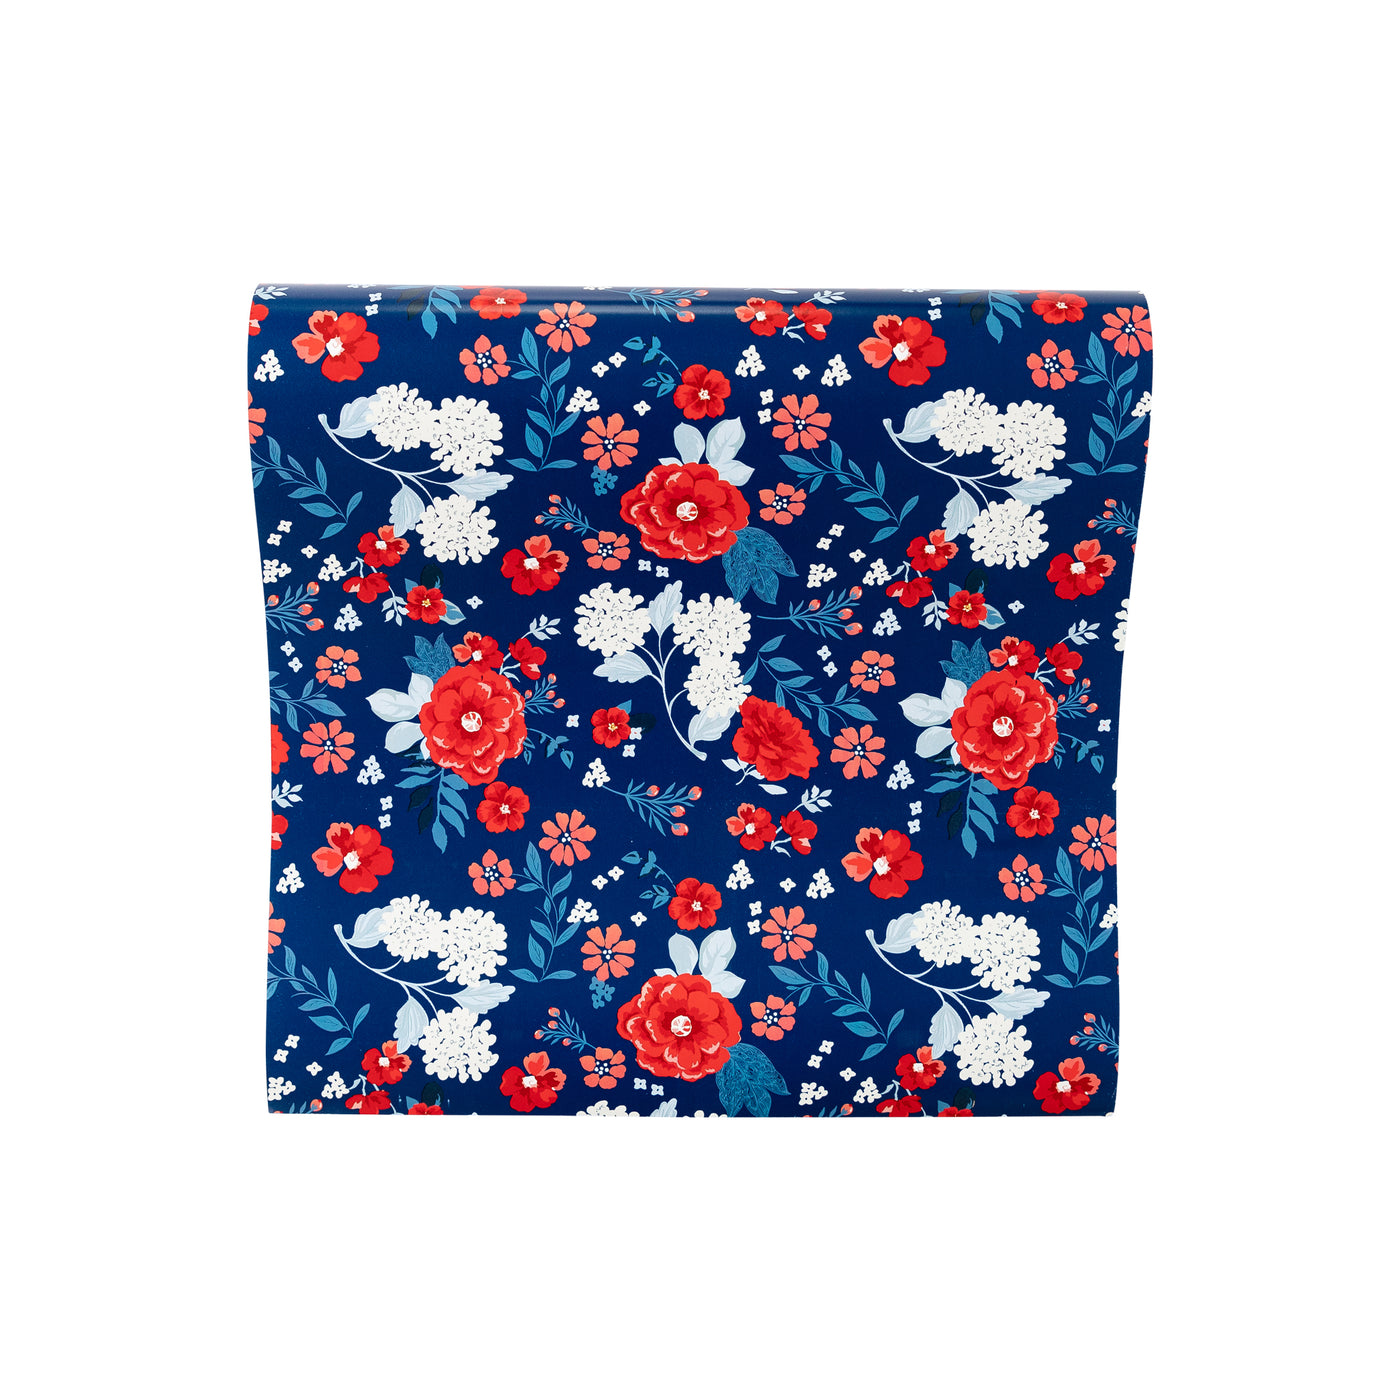 PLTBR55 - Blue Floral Paper Table Runner